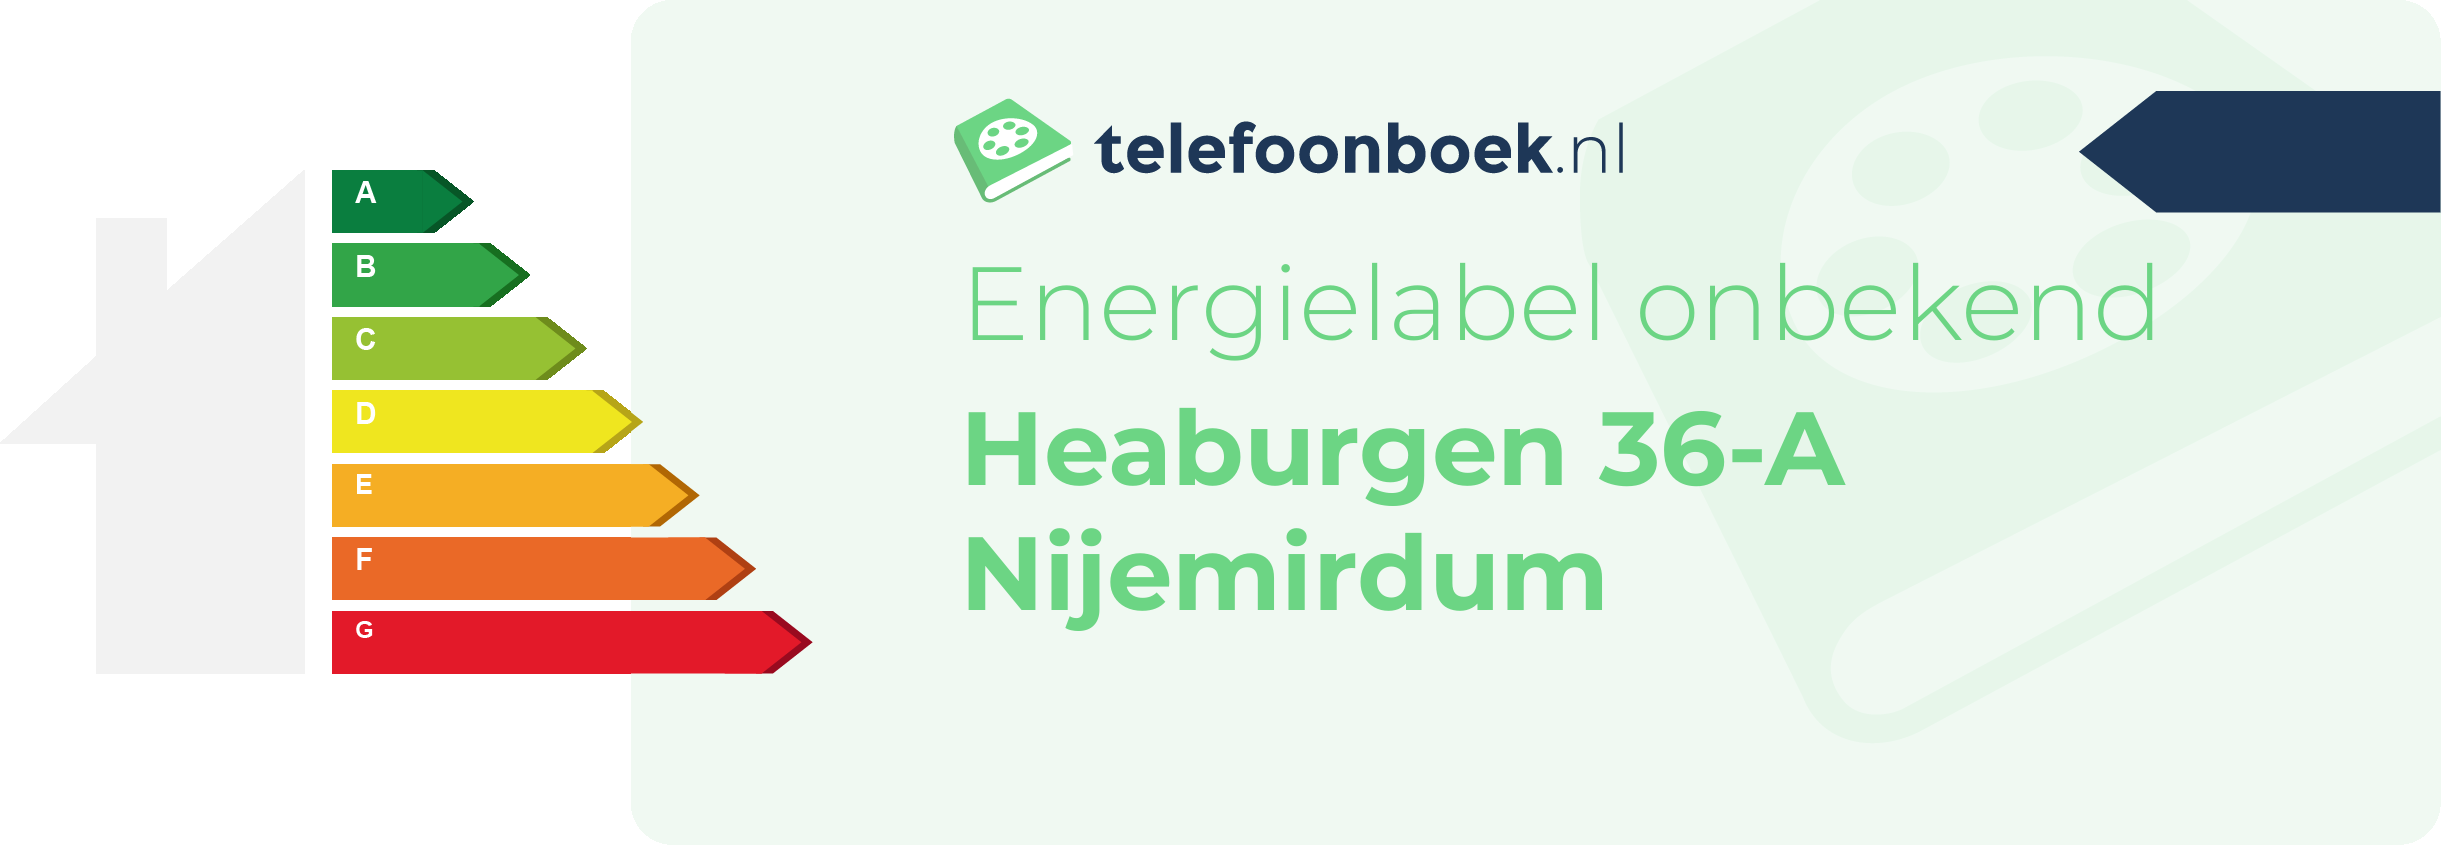 Energielabel Heaburgen 36-A Nijemirdum